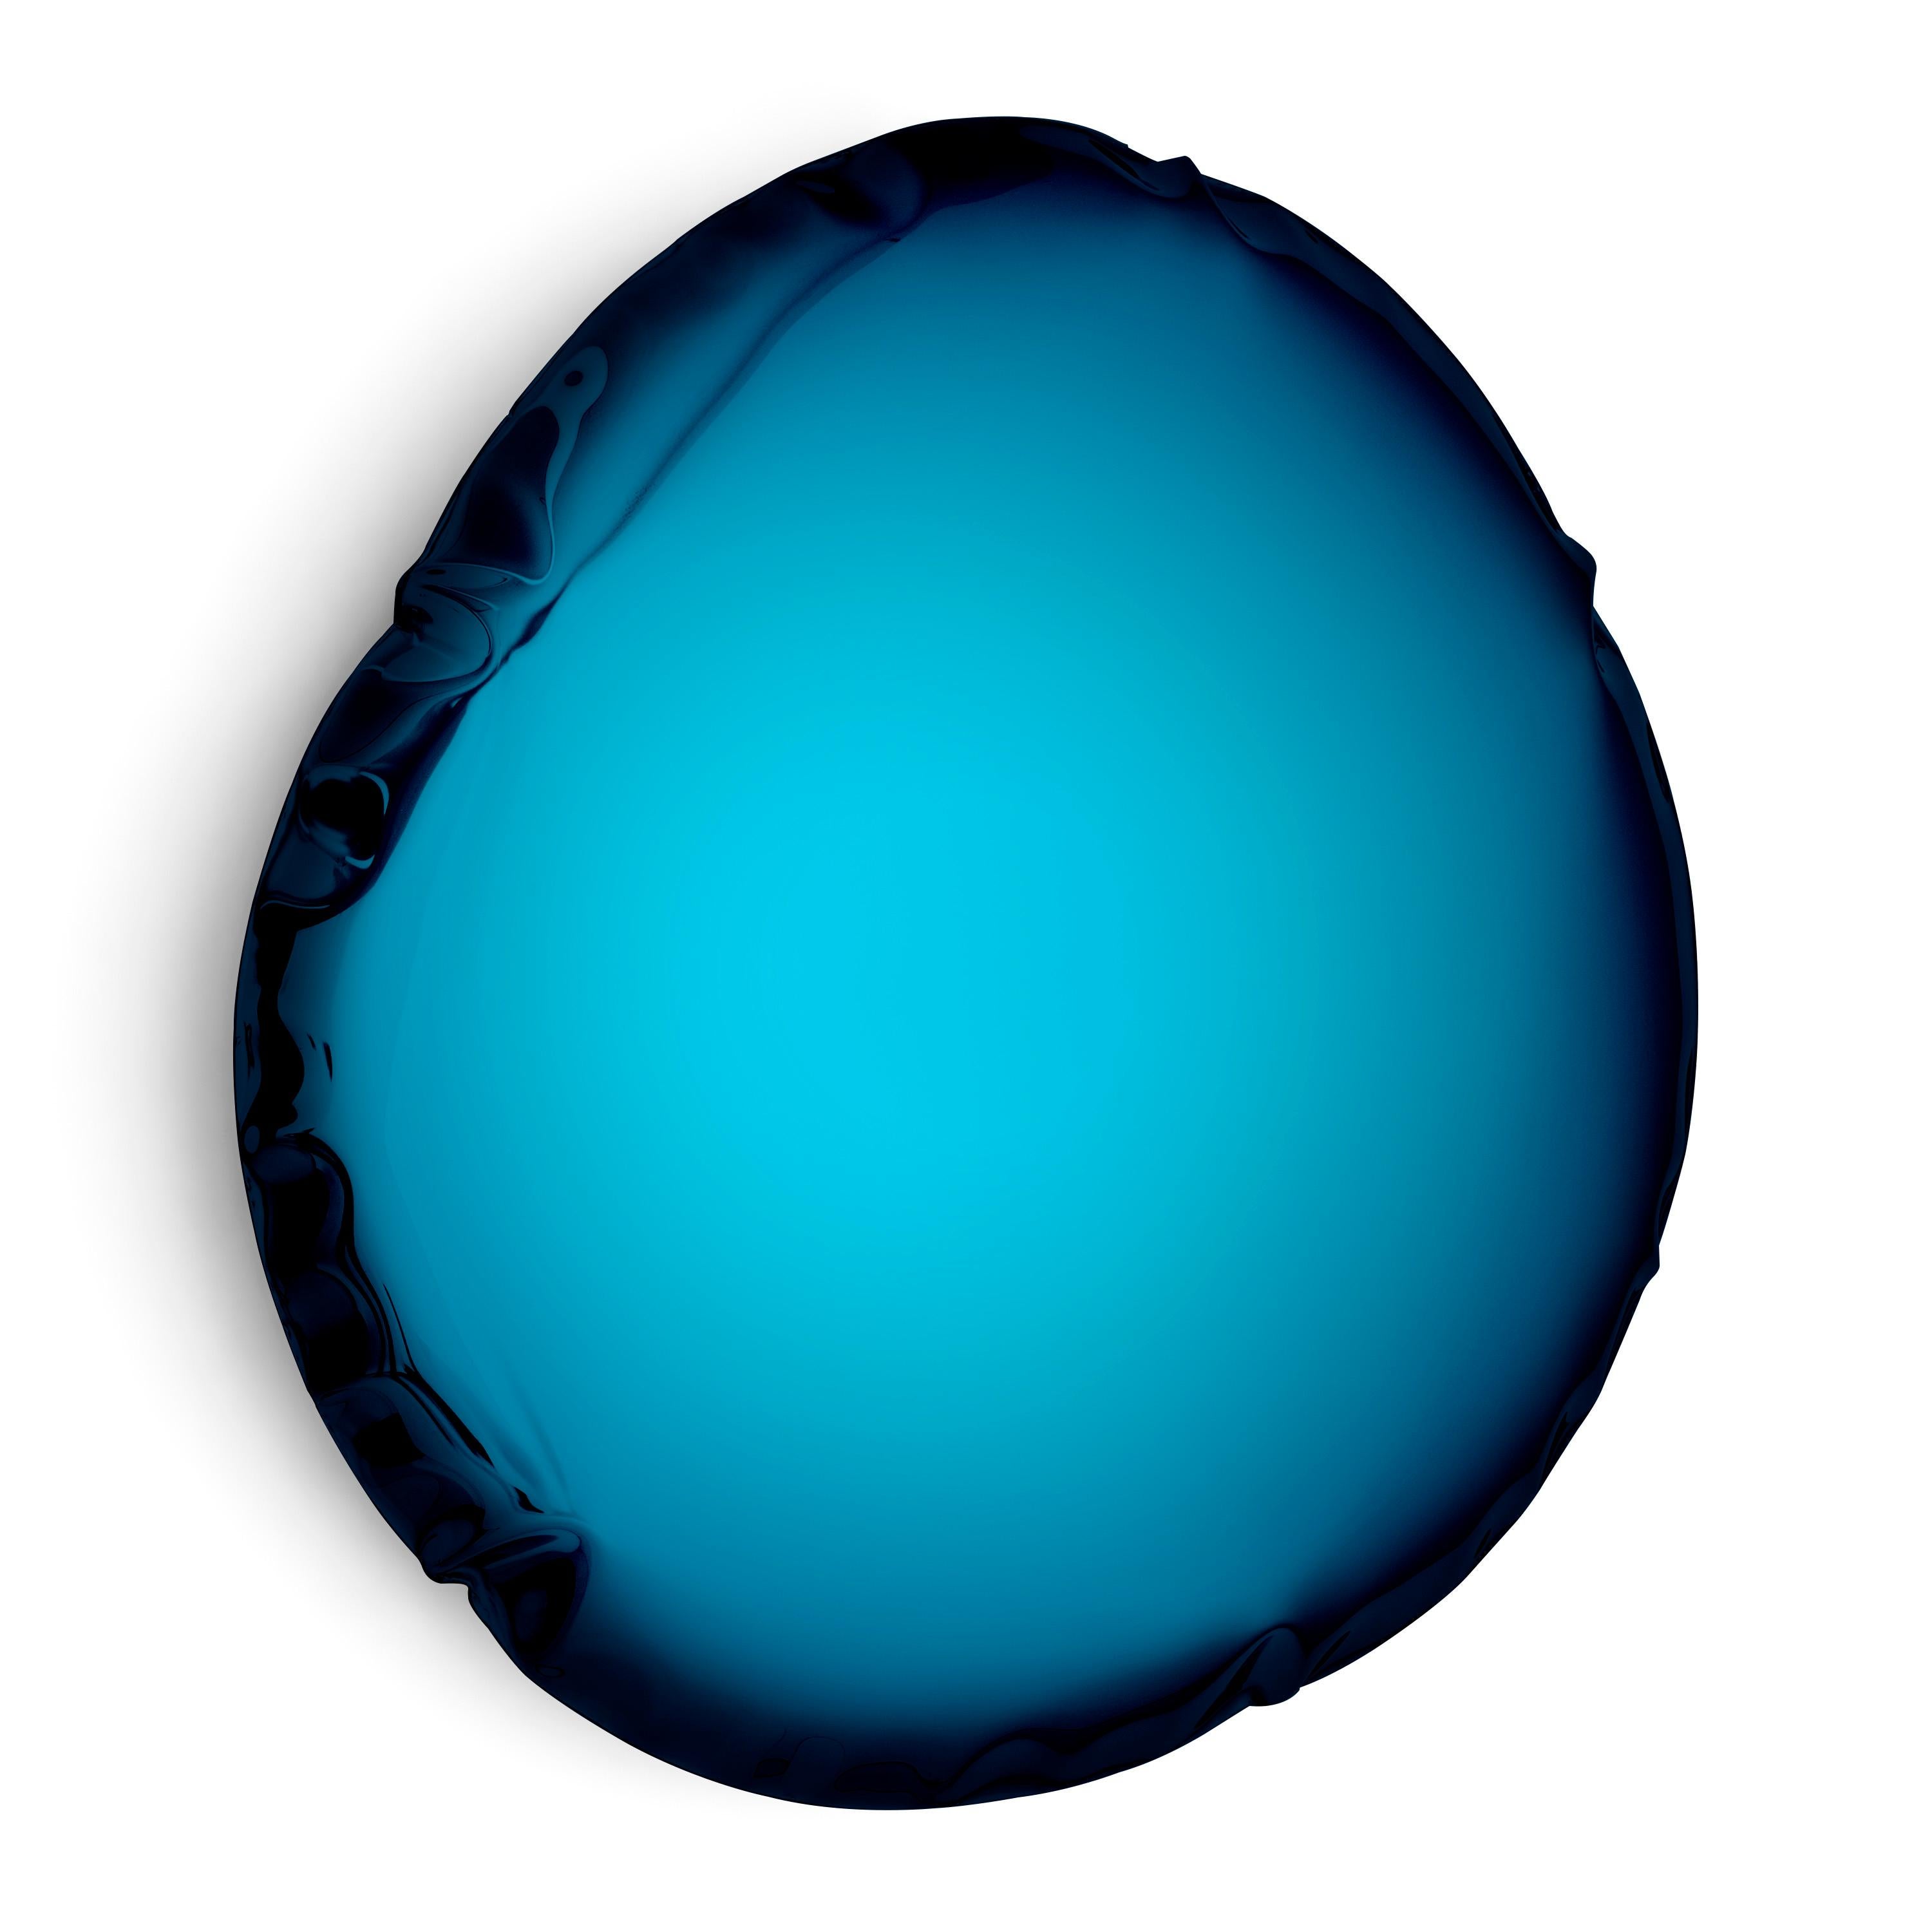 Miroir mural tafla O6 bleu profond par Zieta
Dimensions : D 6 x L 50 x H 55 cm 
Matériau : Acier inoxydable.
Finition : Bleu profond de l'espace. 
Finitions disponibles : Acier inoxydable, Blanc mat, Saphir/Emeraude, Saphir, Émeraude, Bleu espace